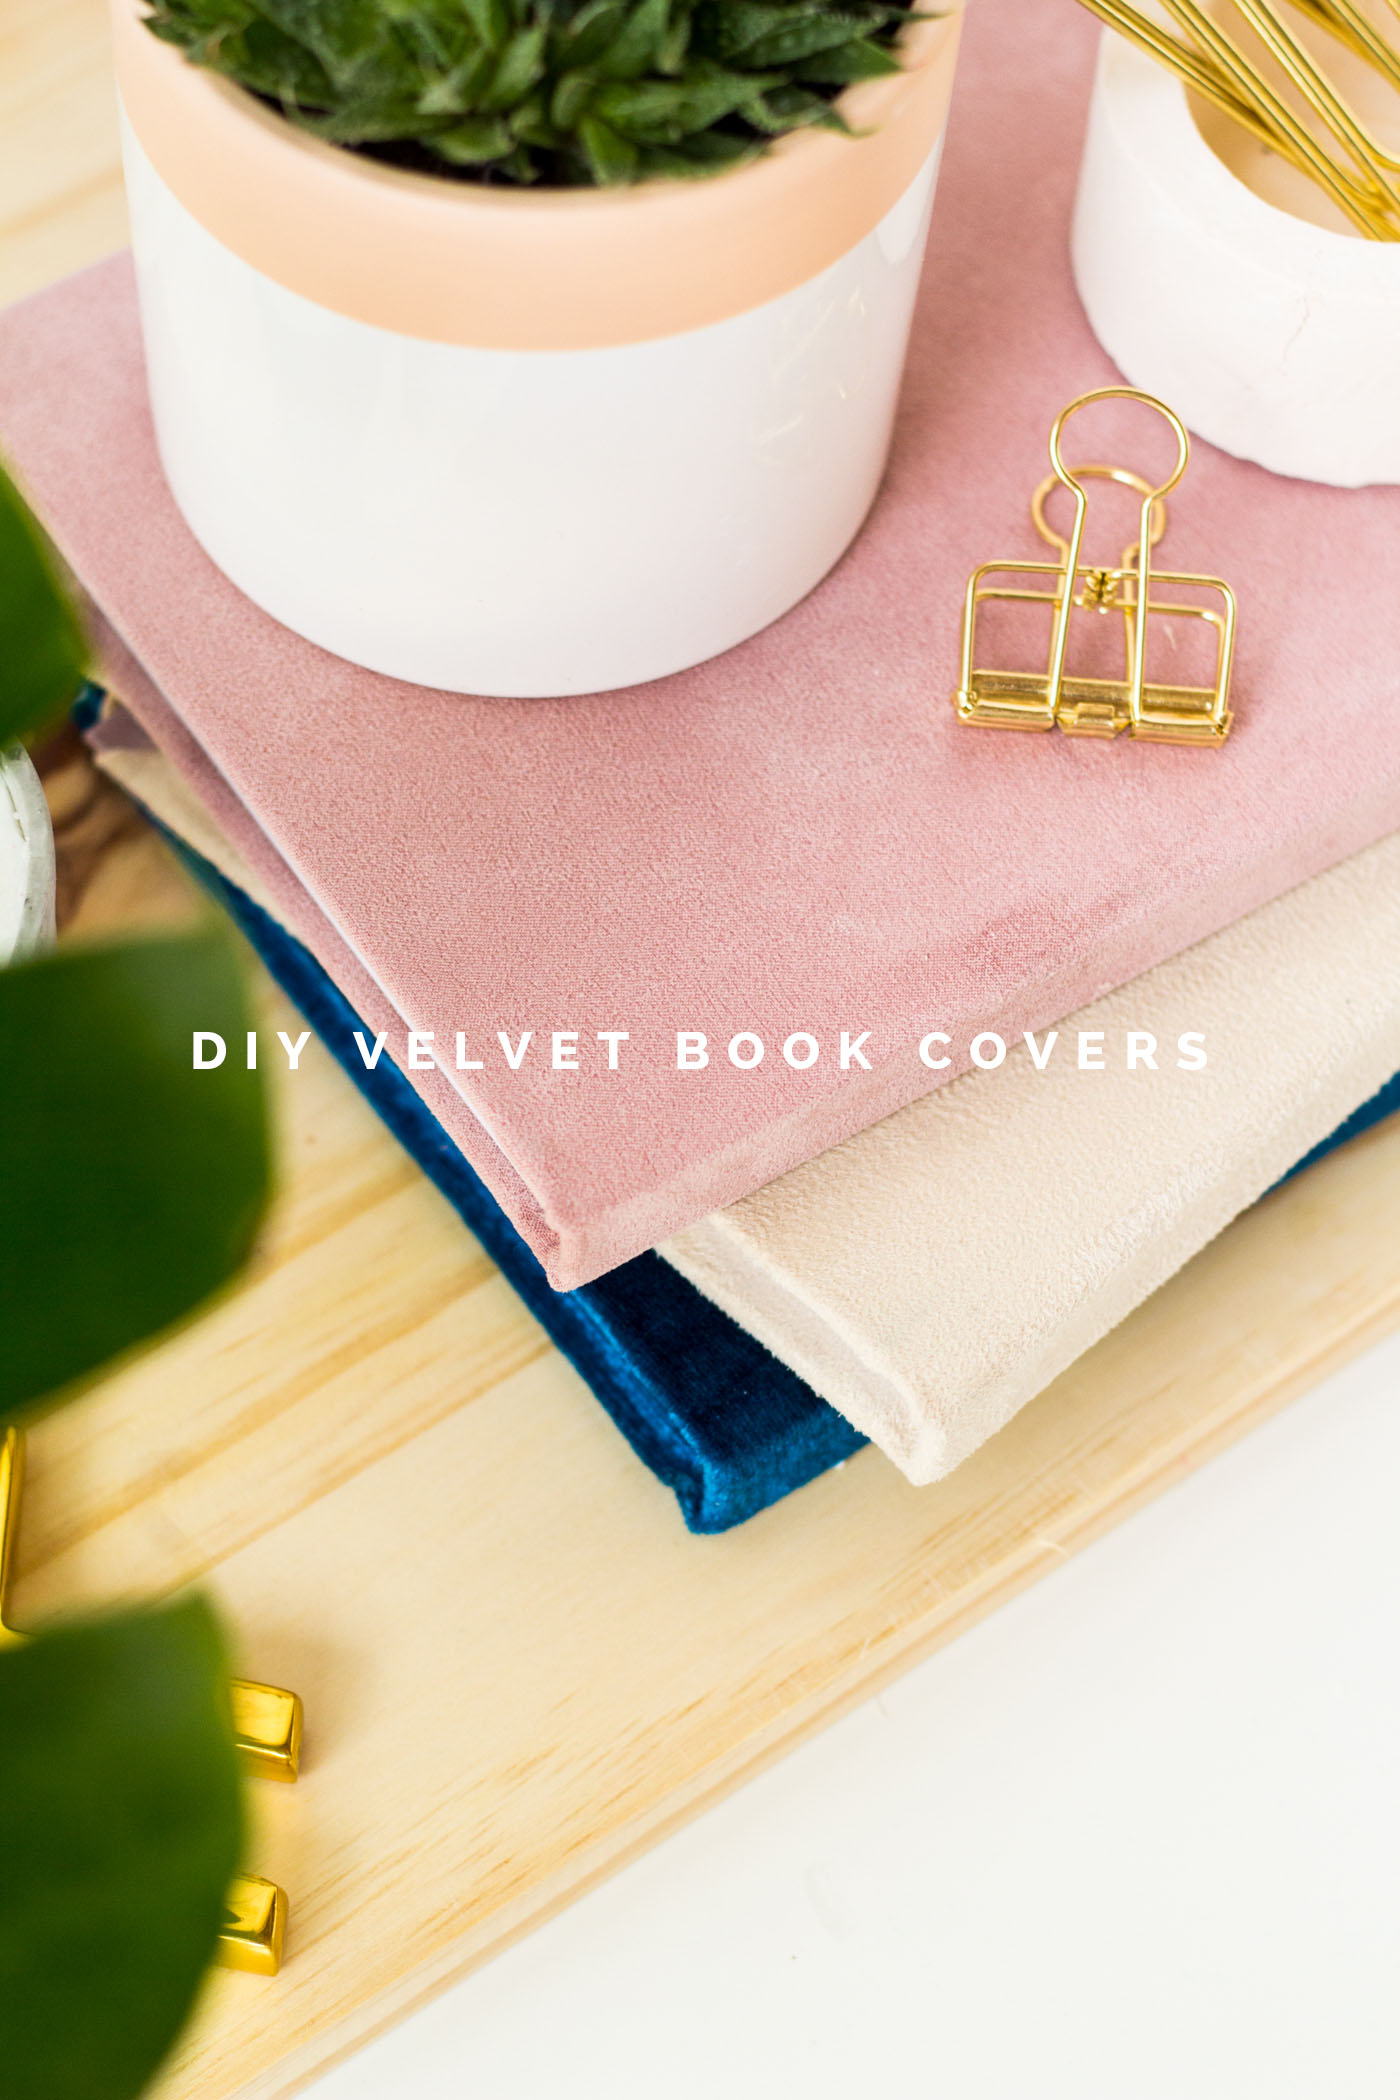 DIY Velvet book covers tutorial | @fallfordiy